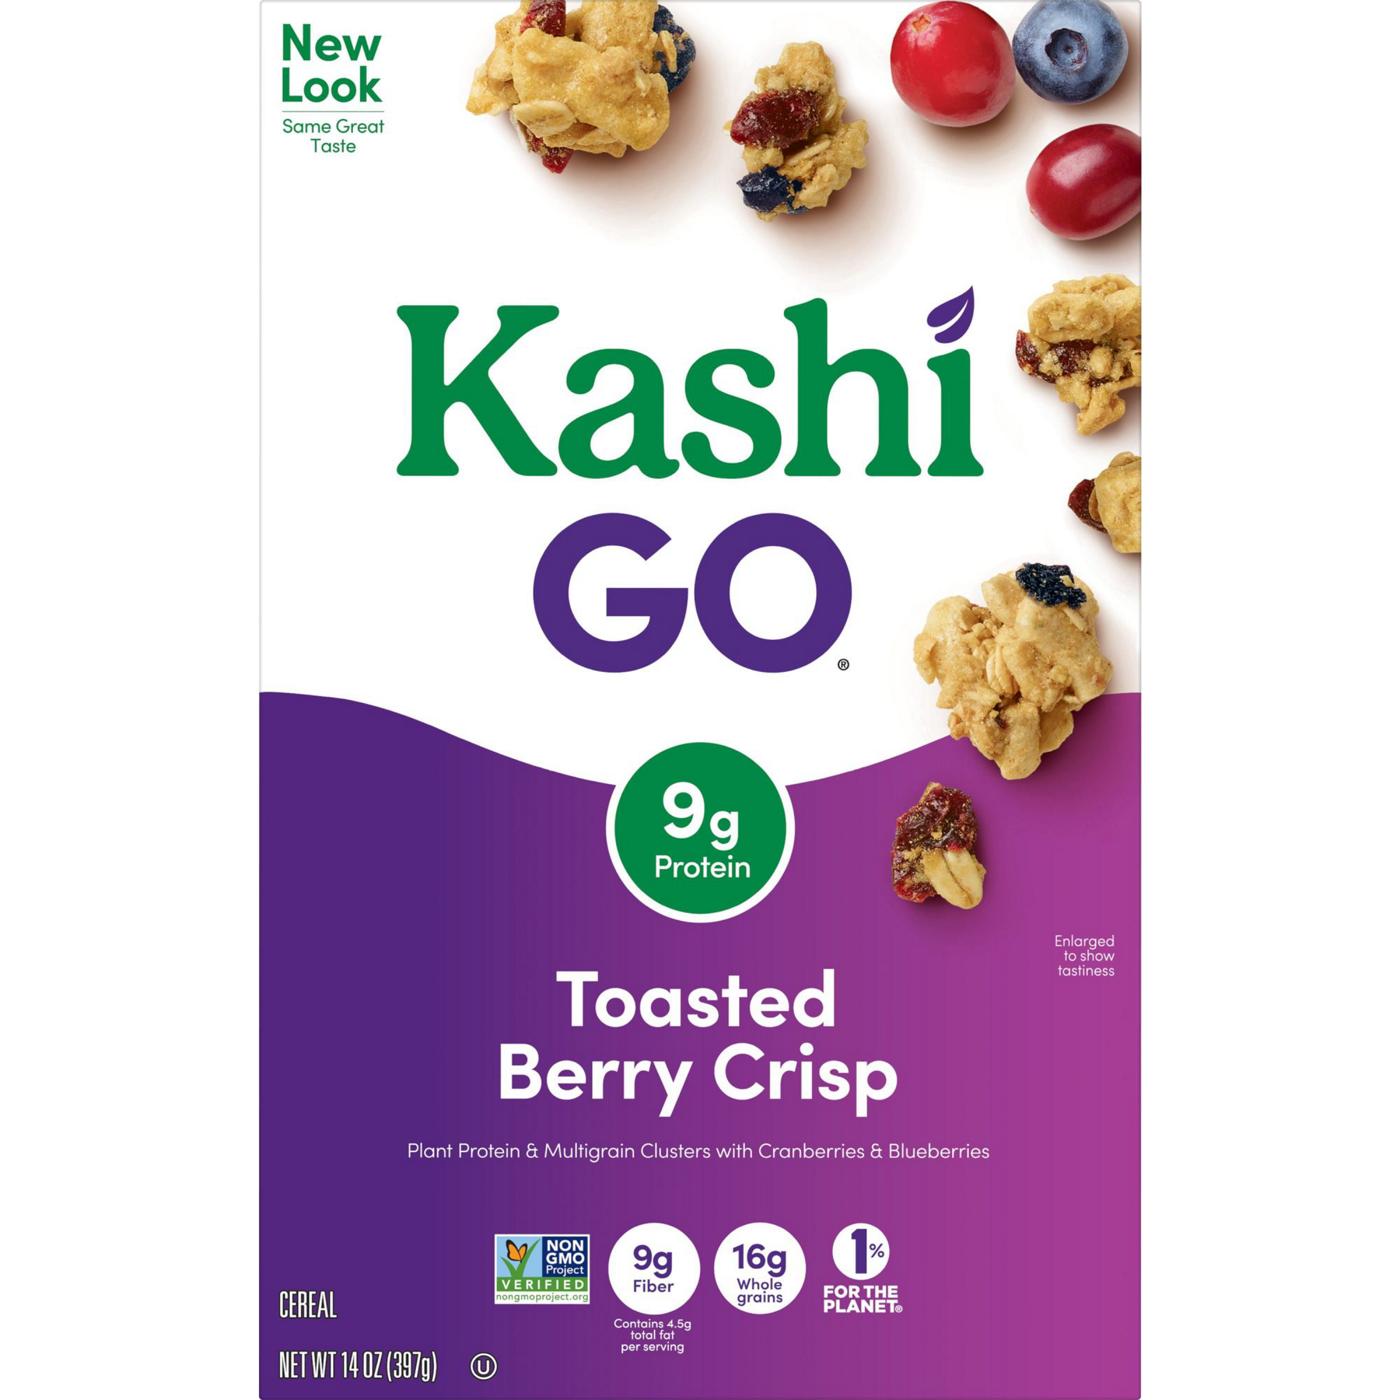 Kashi GO Toasted Berry Crisp Breakfast Cereal; image 1 of 8